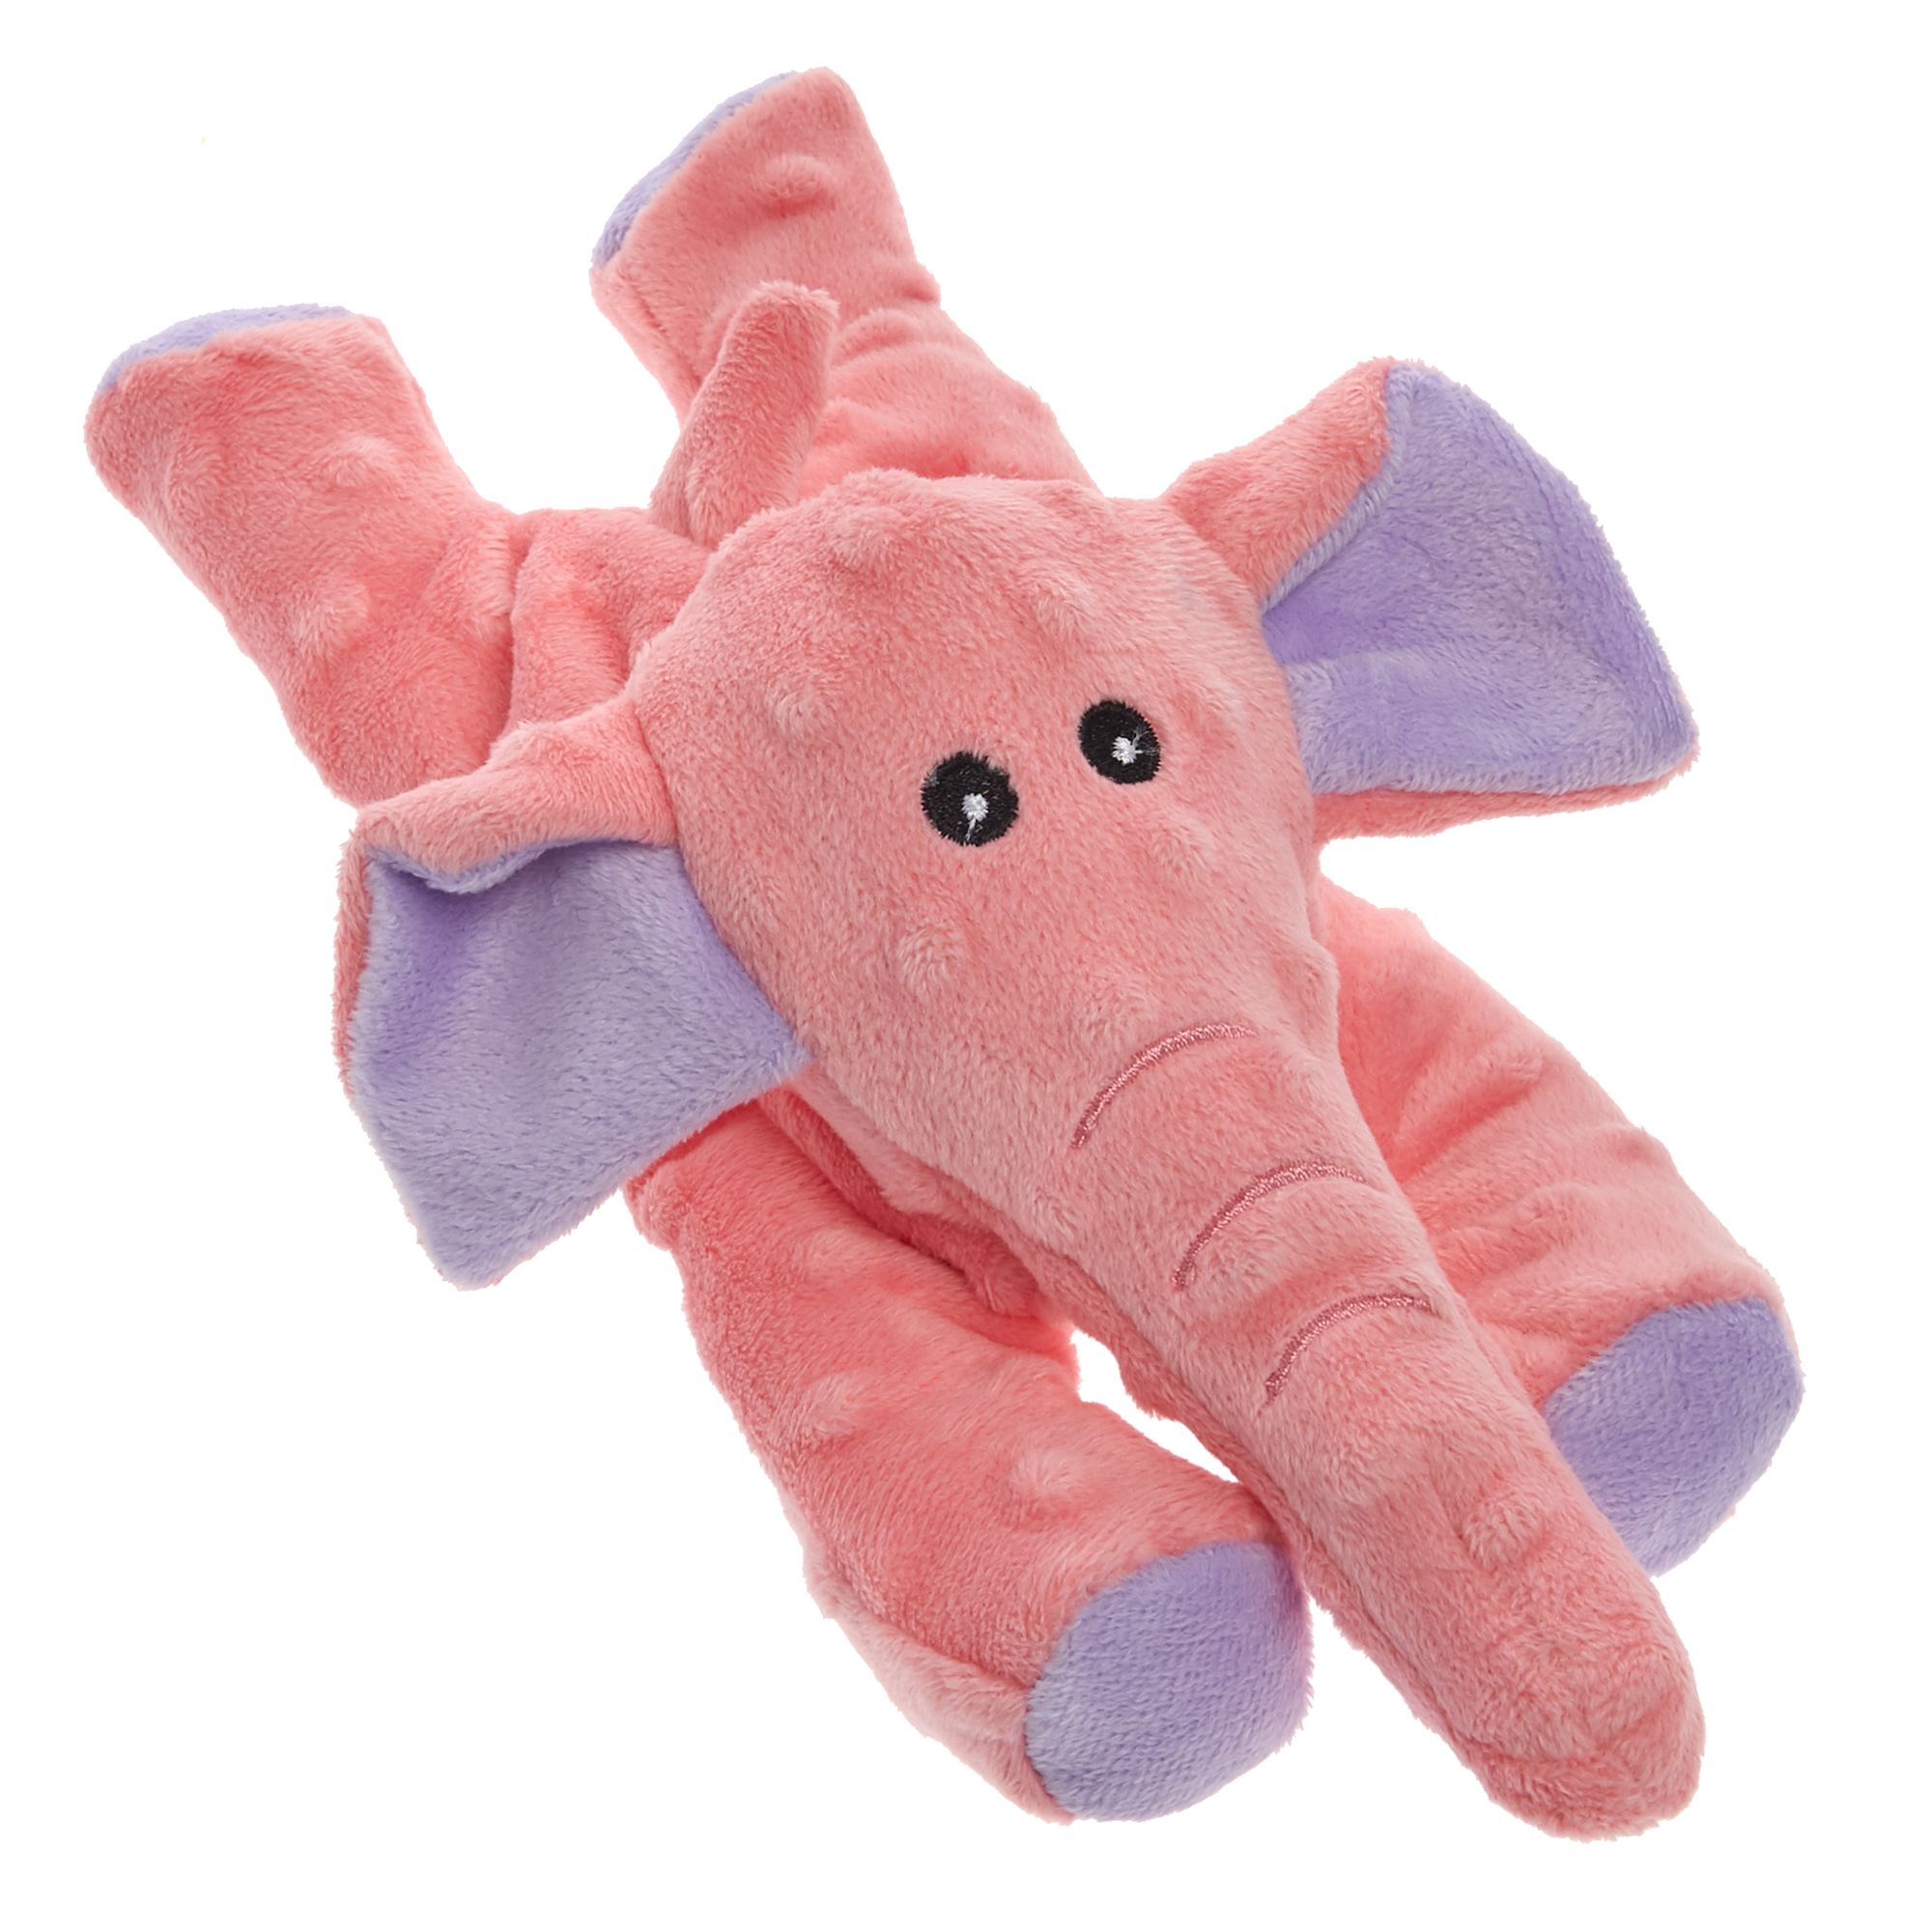 pink elephant toy